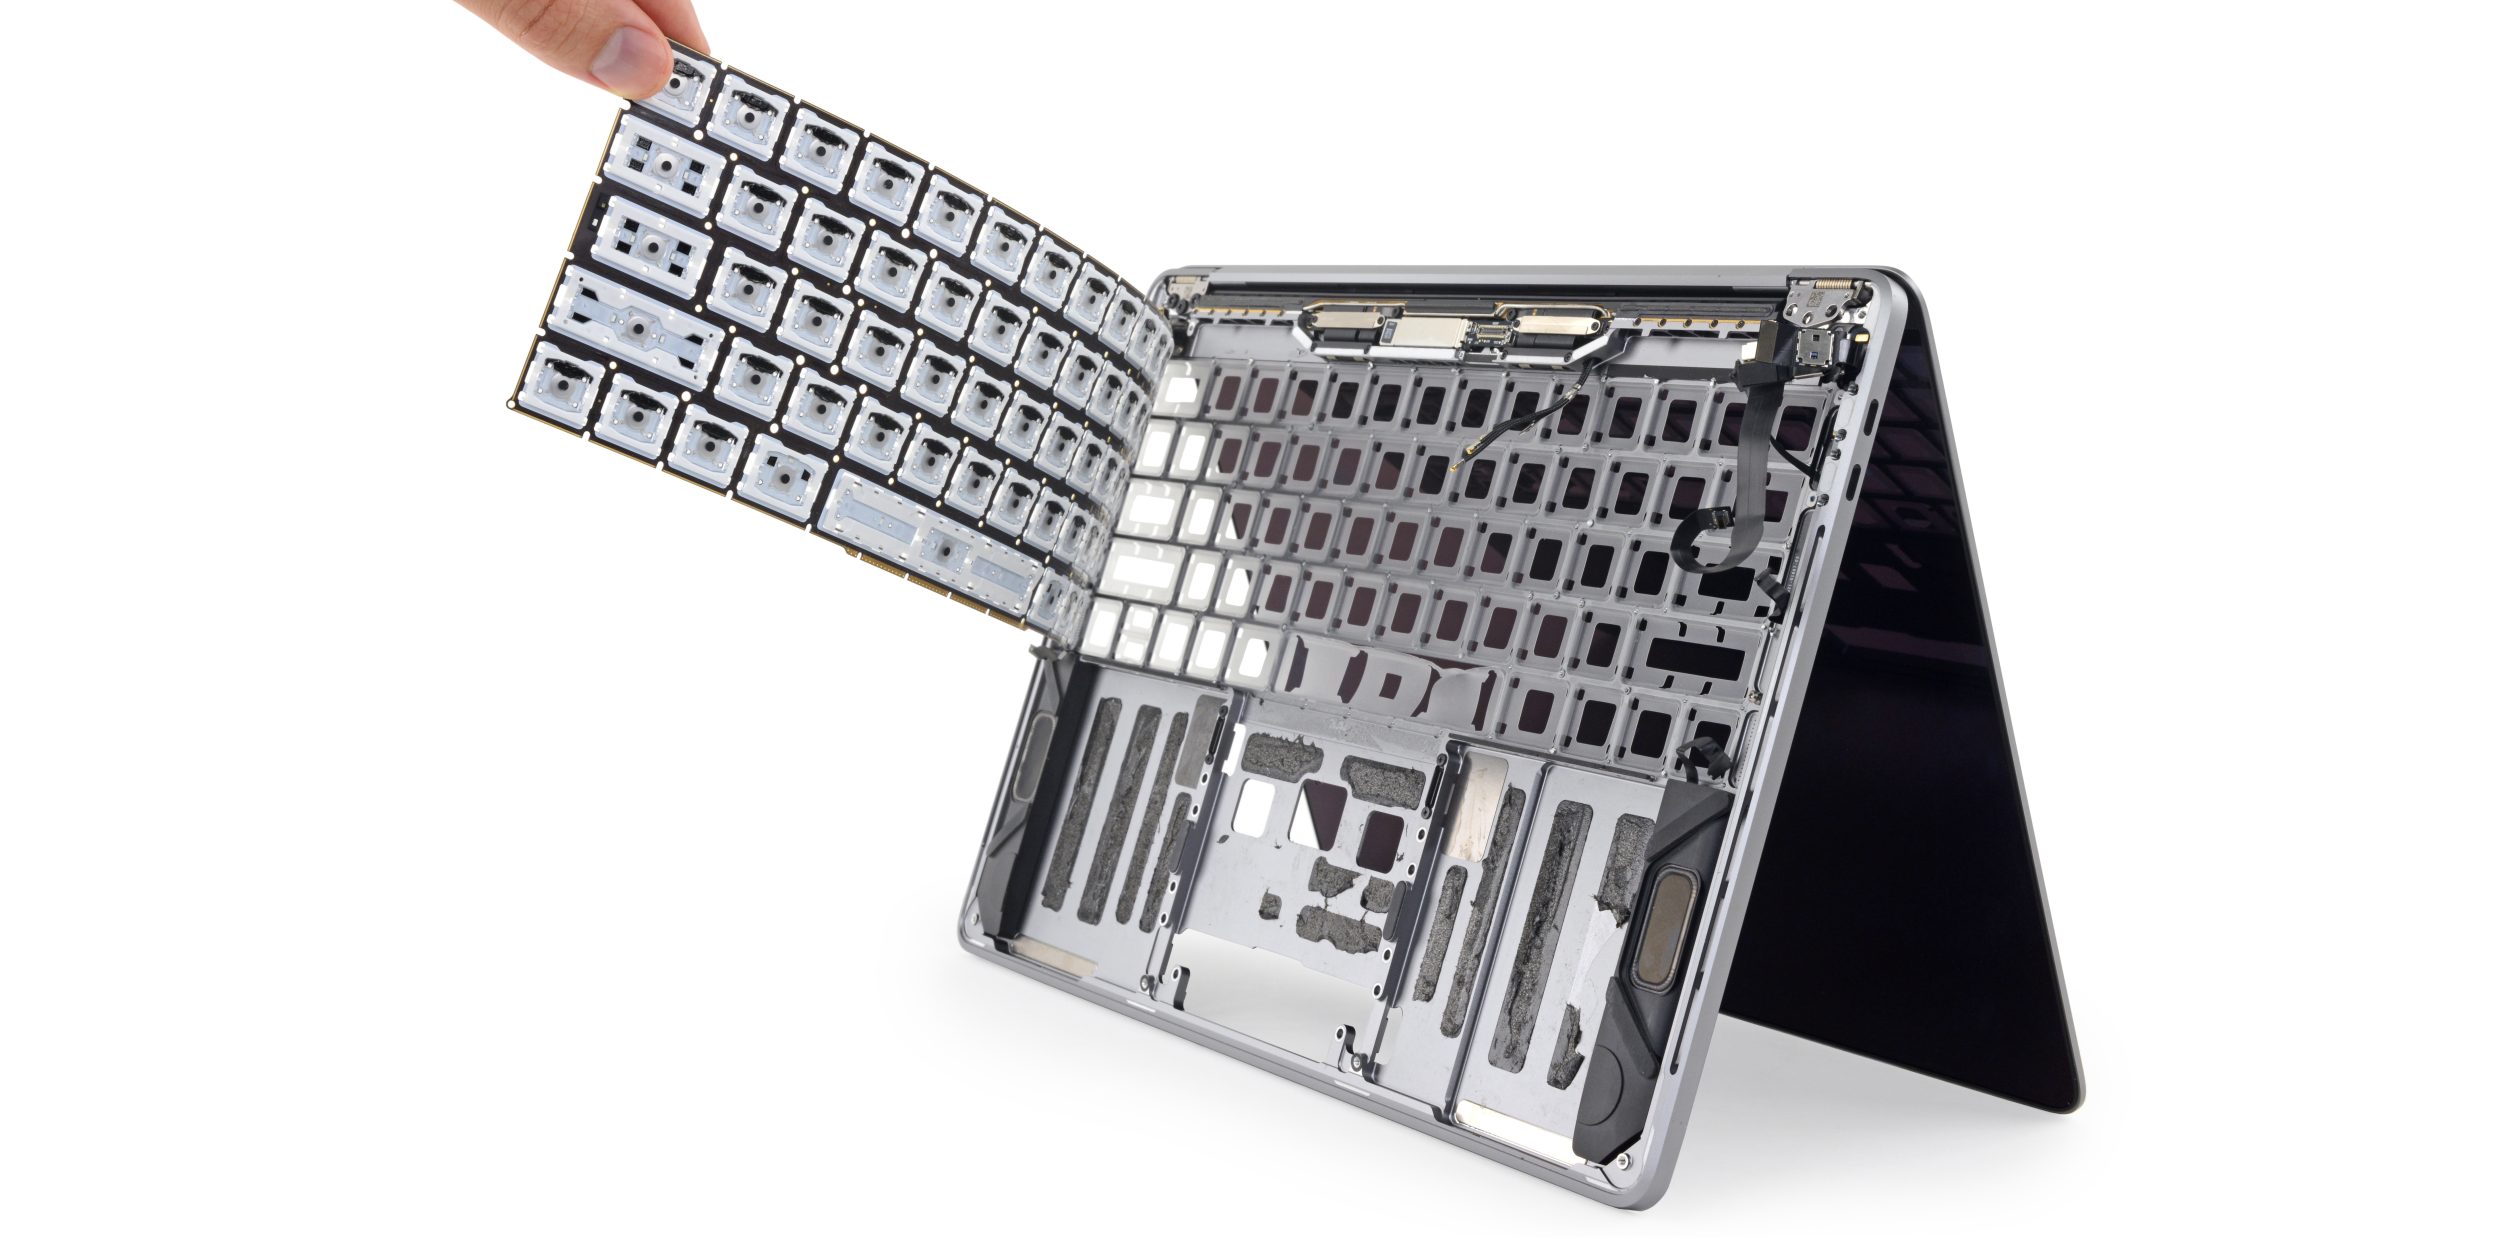 onscreen keyboard for mac os x utilities